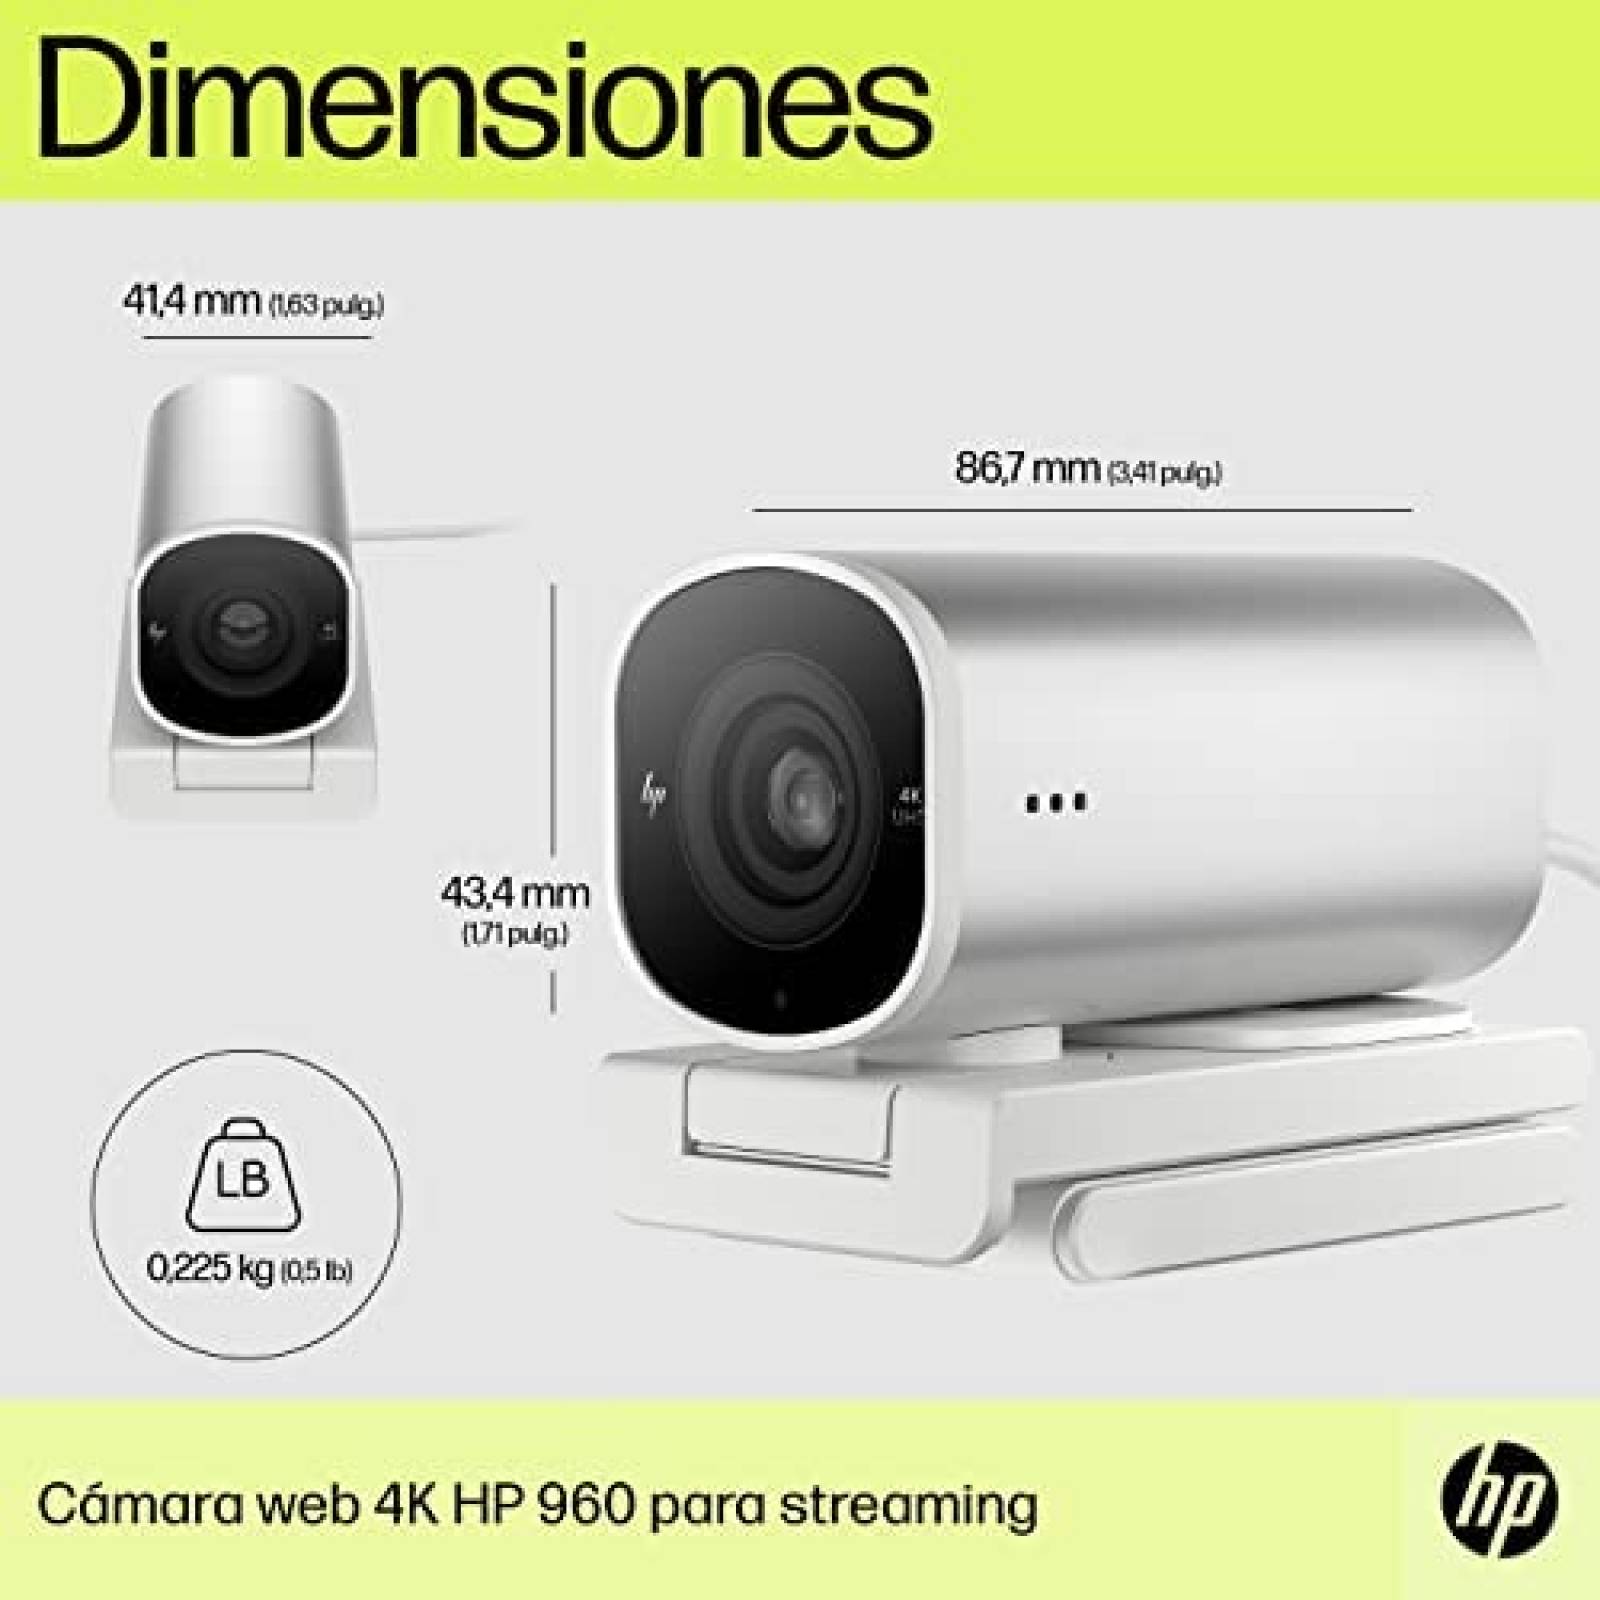 Cámara web 4K para streaming HP 960